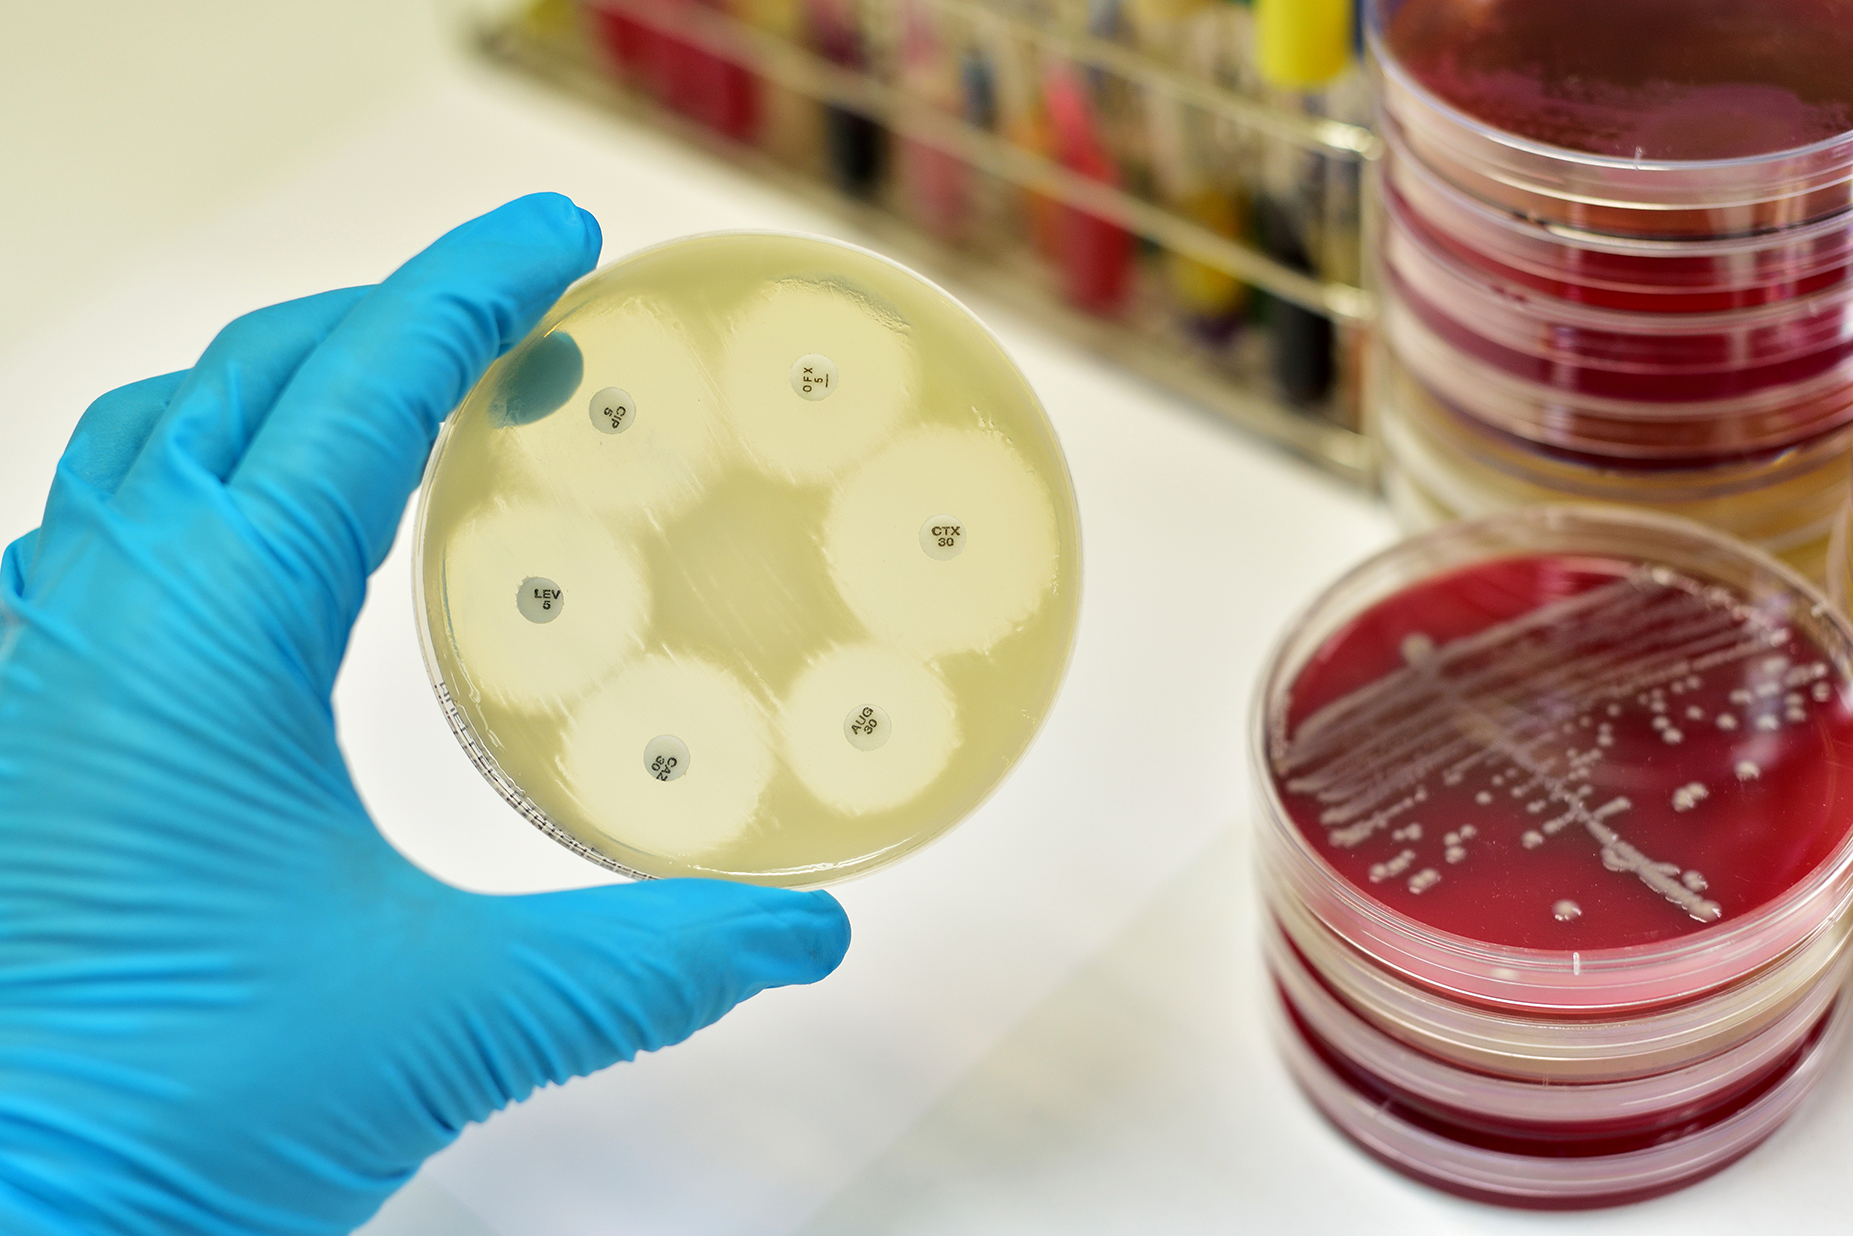 ‘Catastrophic’ superbug could flood hospitals